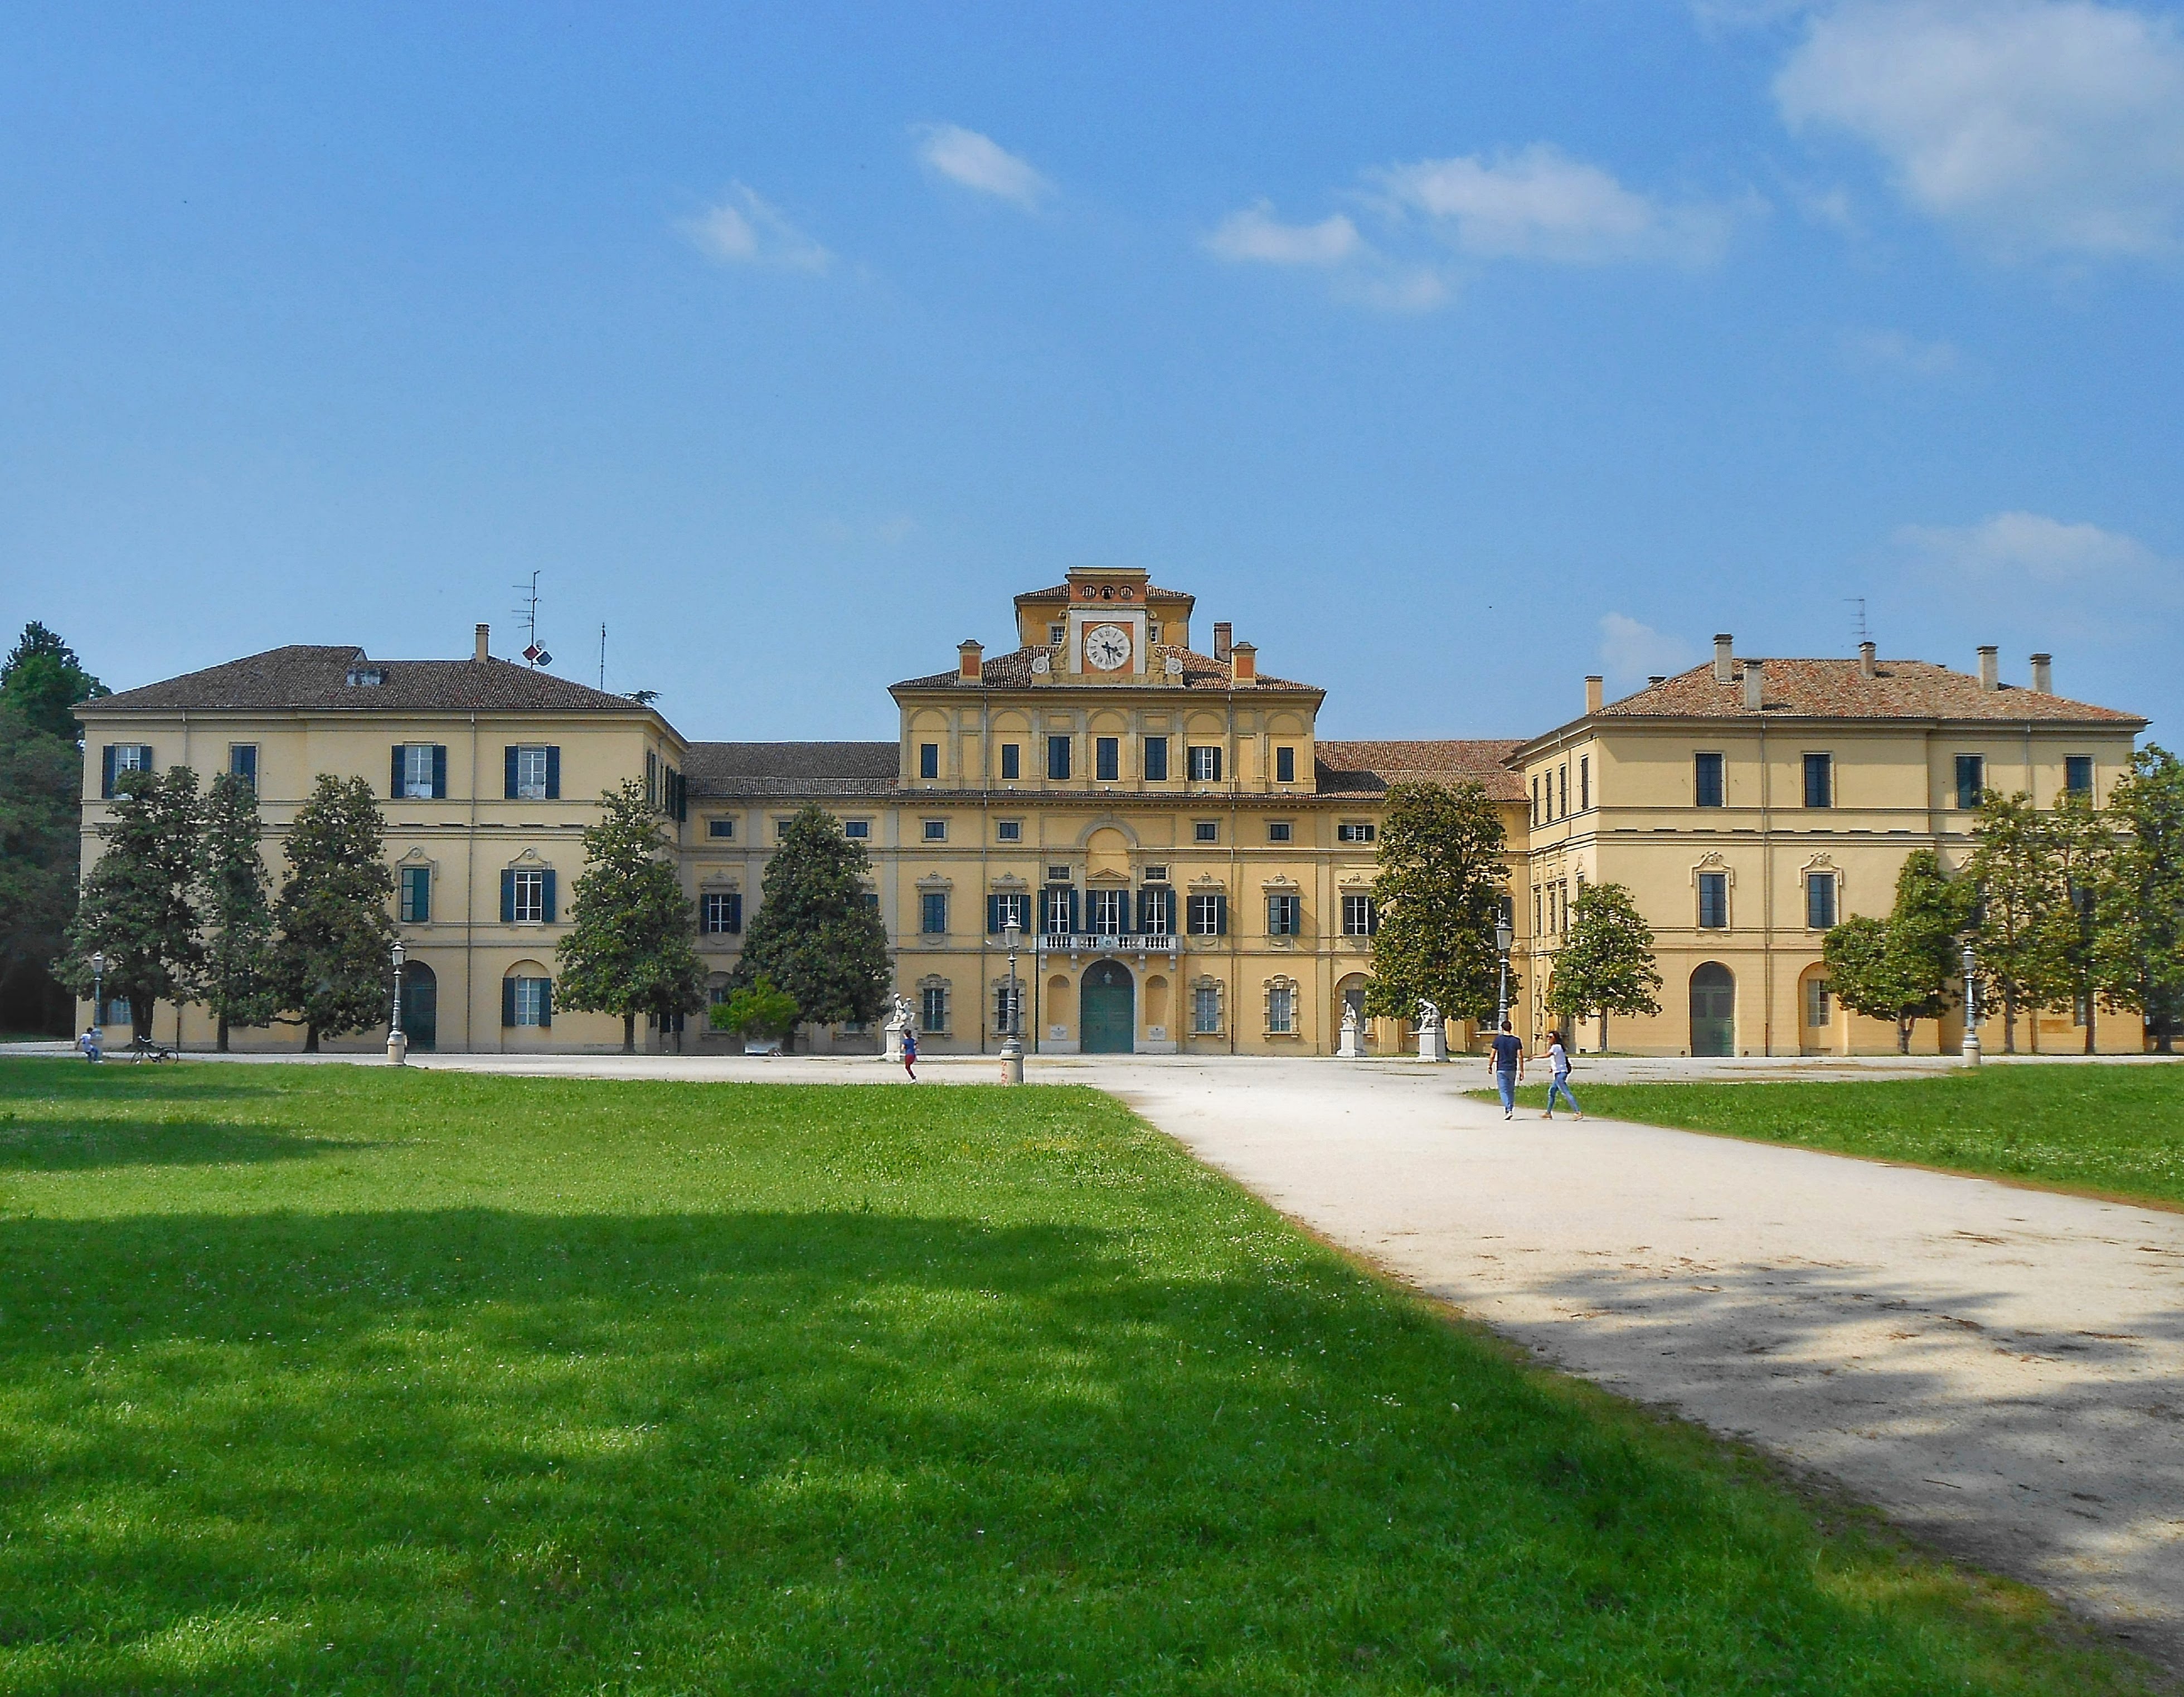 photo: https://upload.wikimedia.org/wikipedia/commons/d/dd/Palazzo_del_giardino_Ducale.jpg